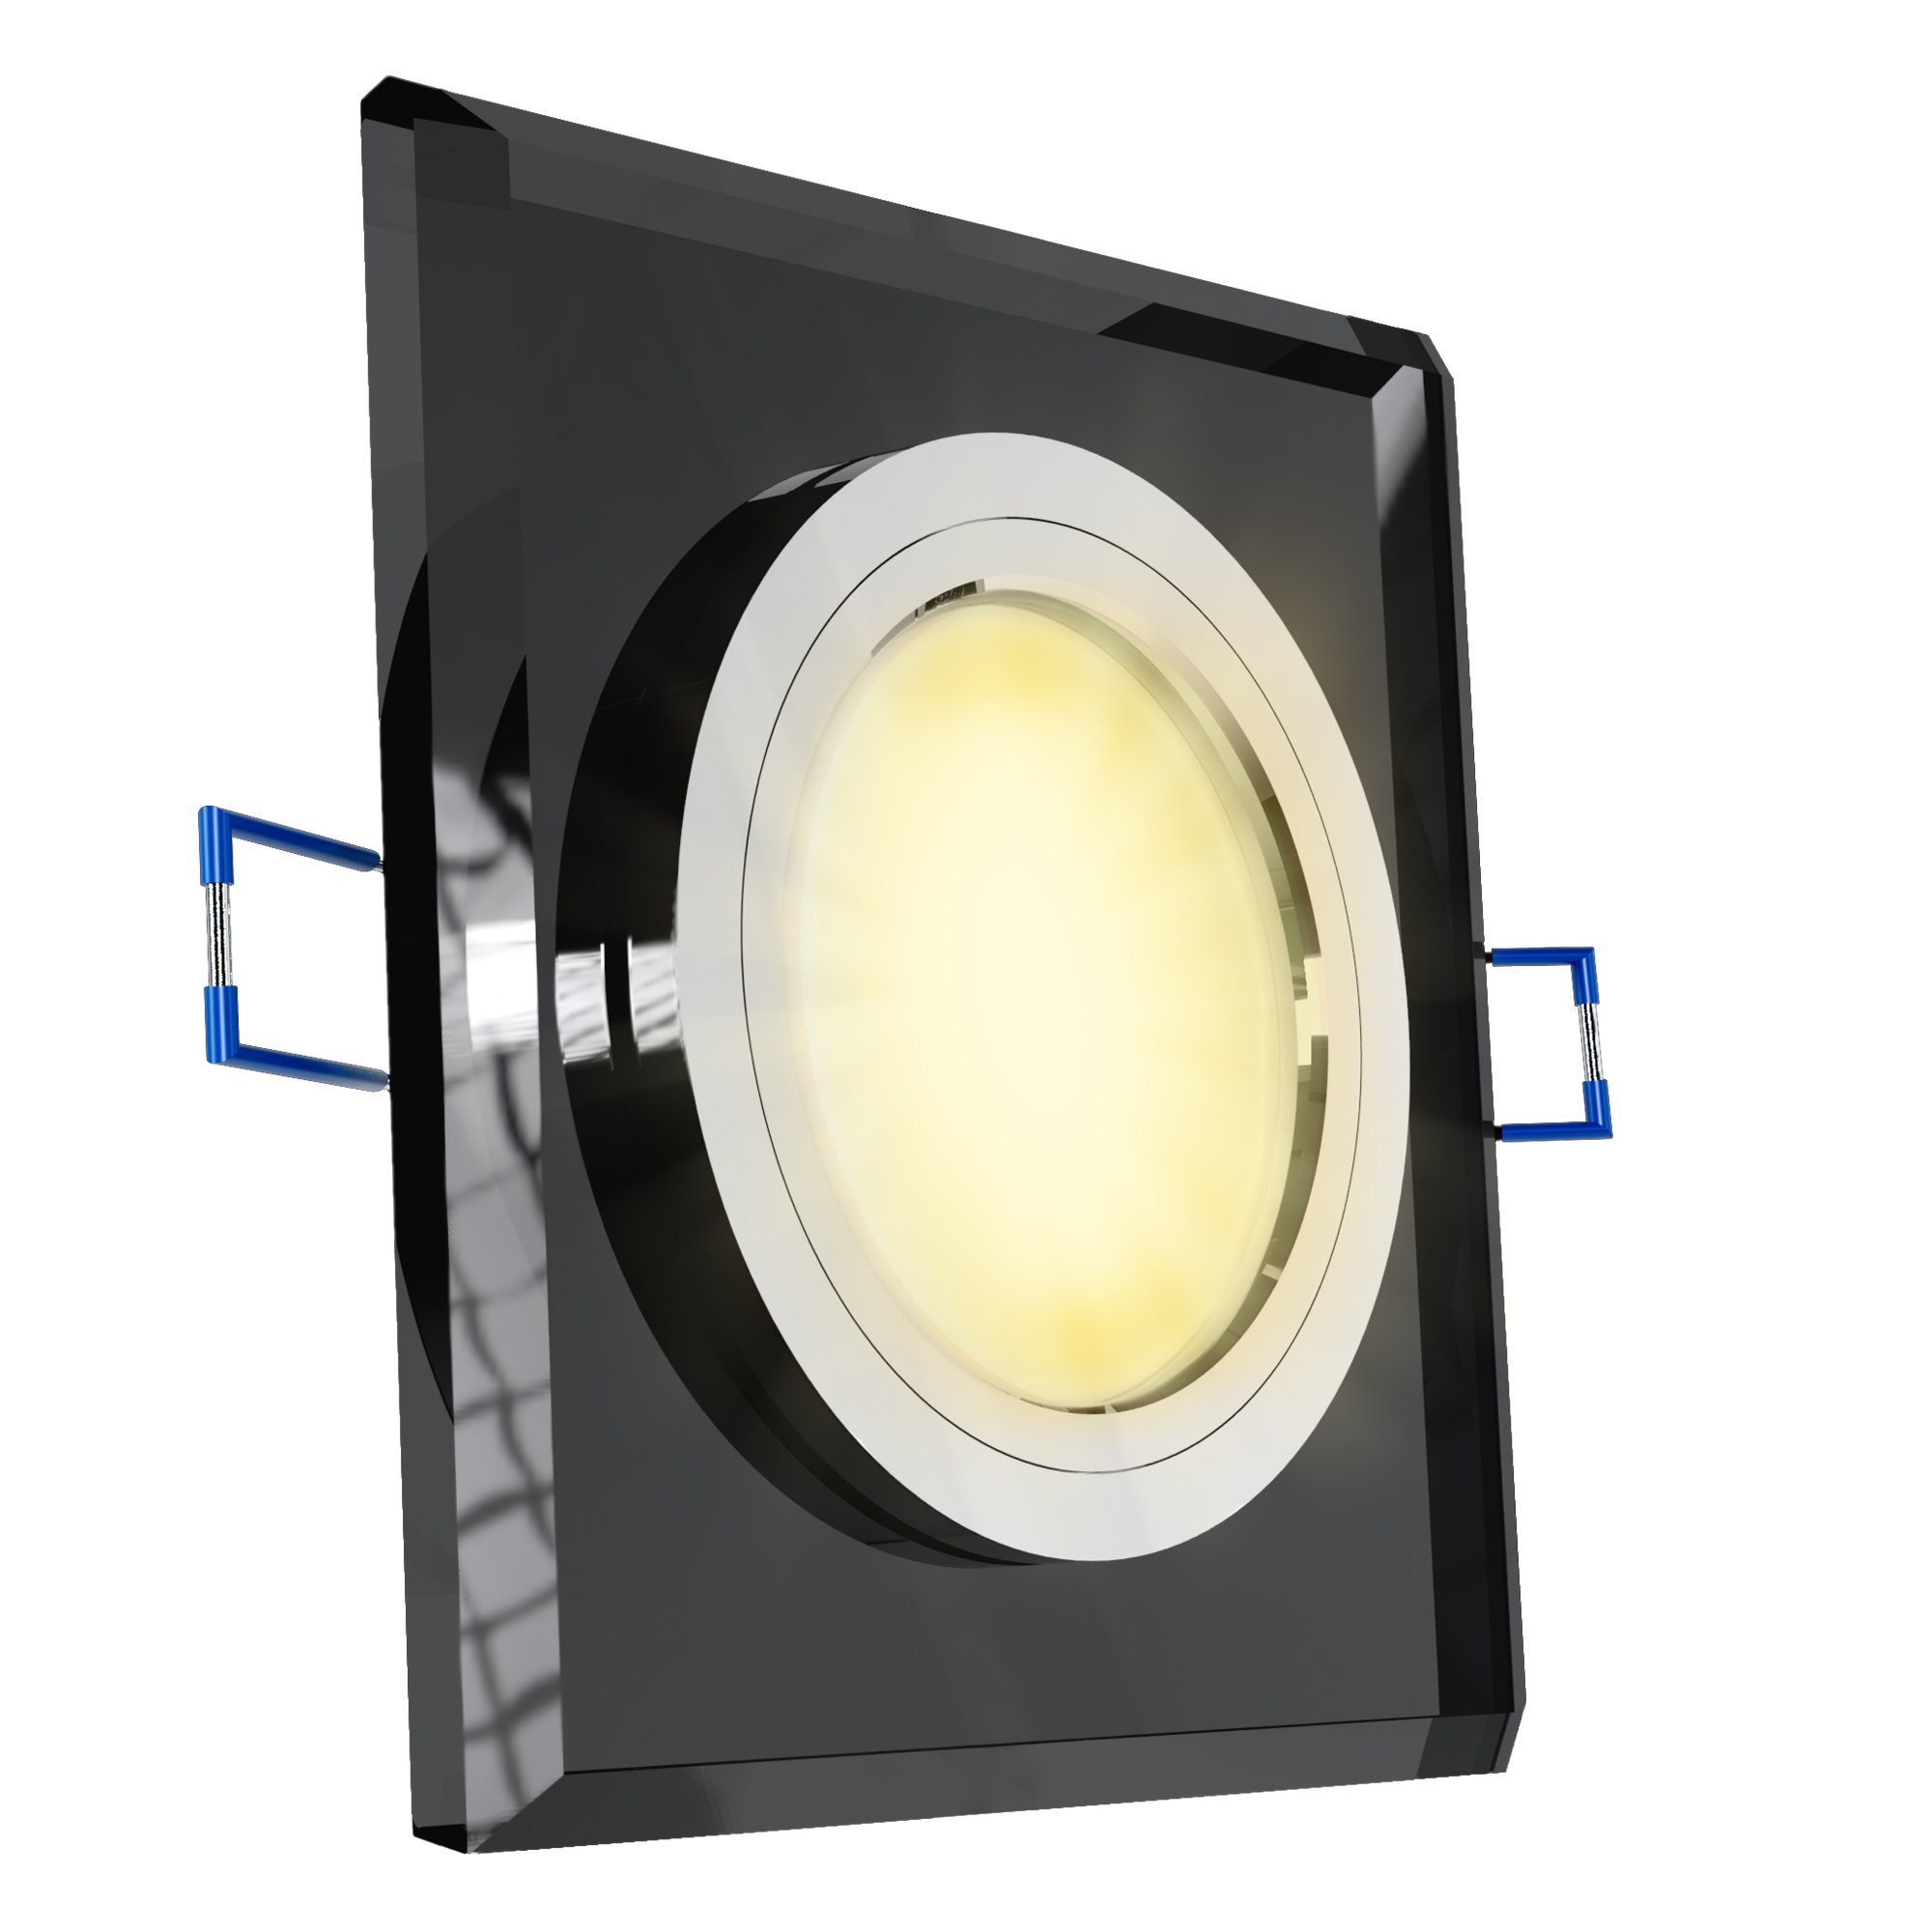 SSC-LUXon LED Einbaustrahler Flacher Glas schwarz Modul, Warmweiß dimmbar eckig LED Einbaustrahler LED mit